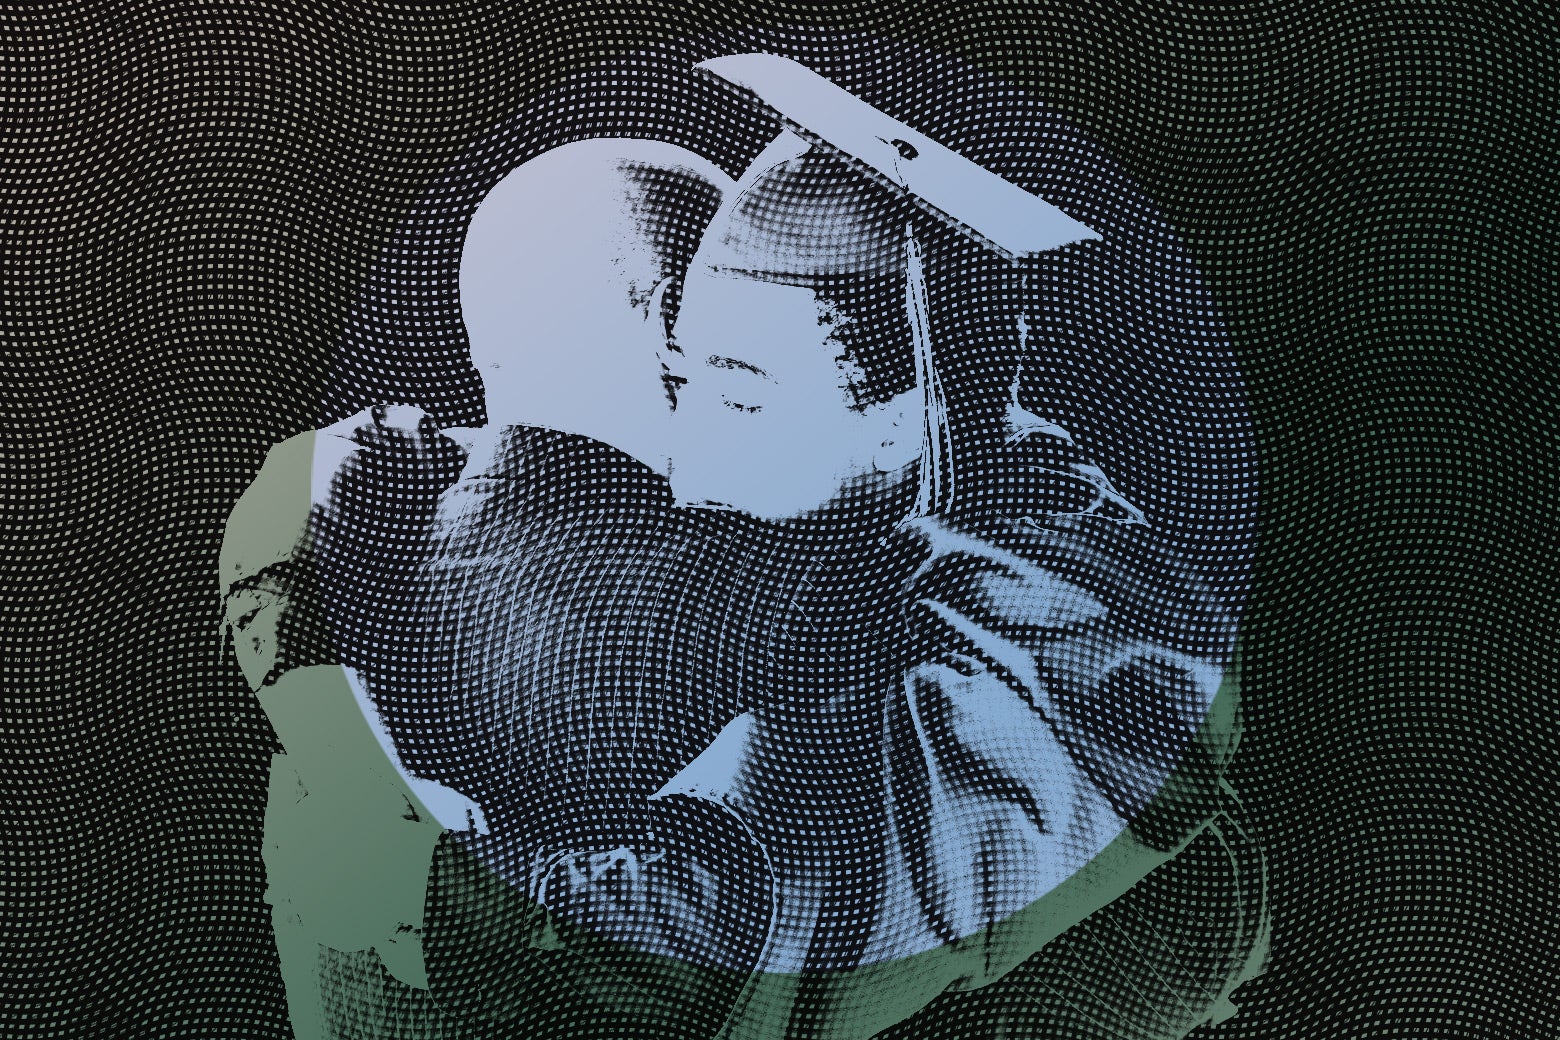 A man and a woman hugging - the woman has a graduation cap. 